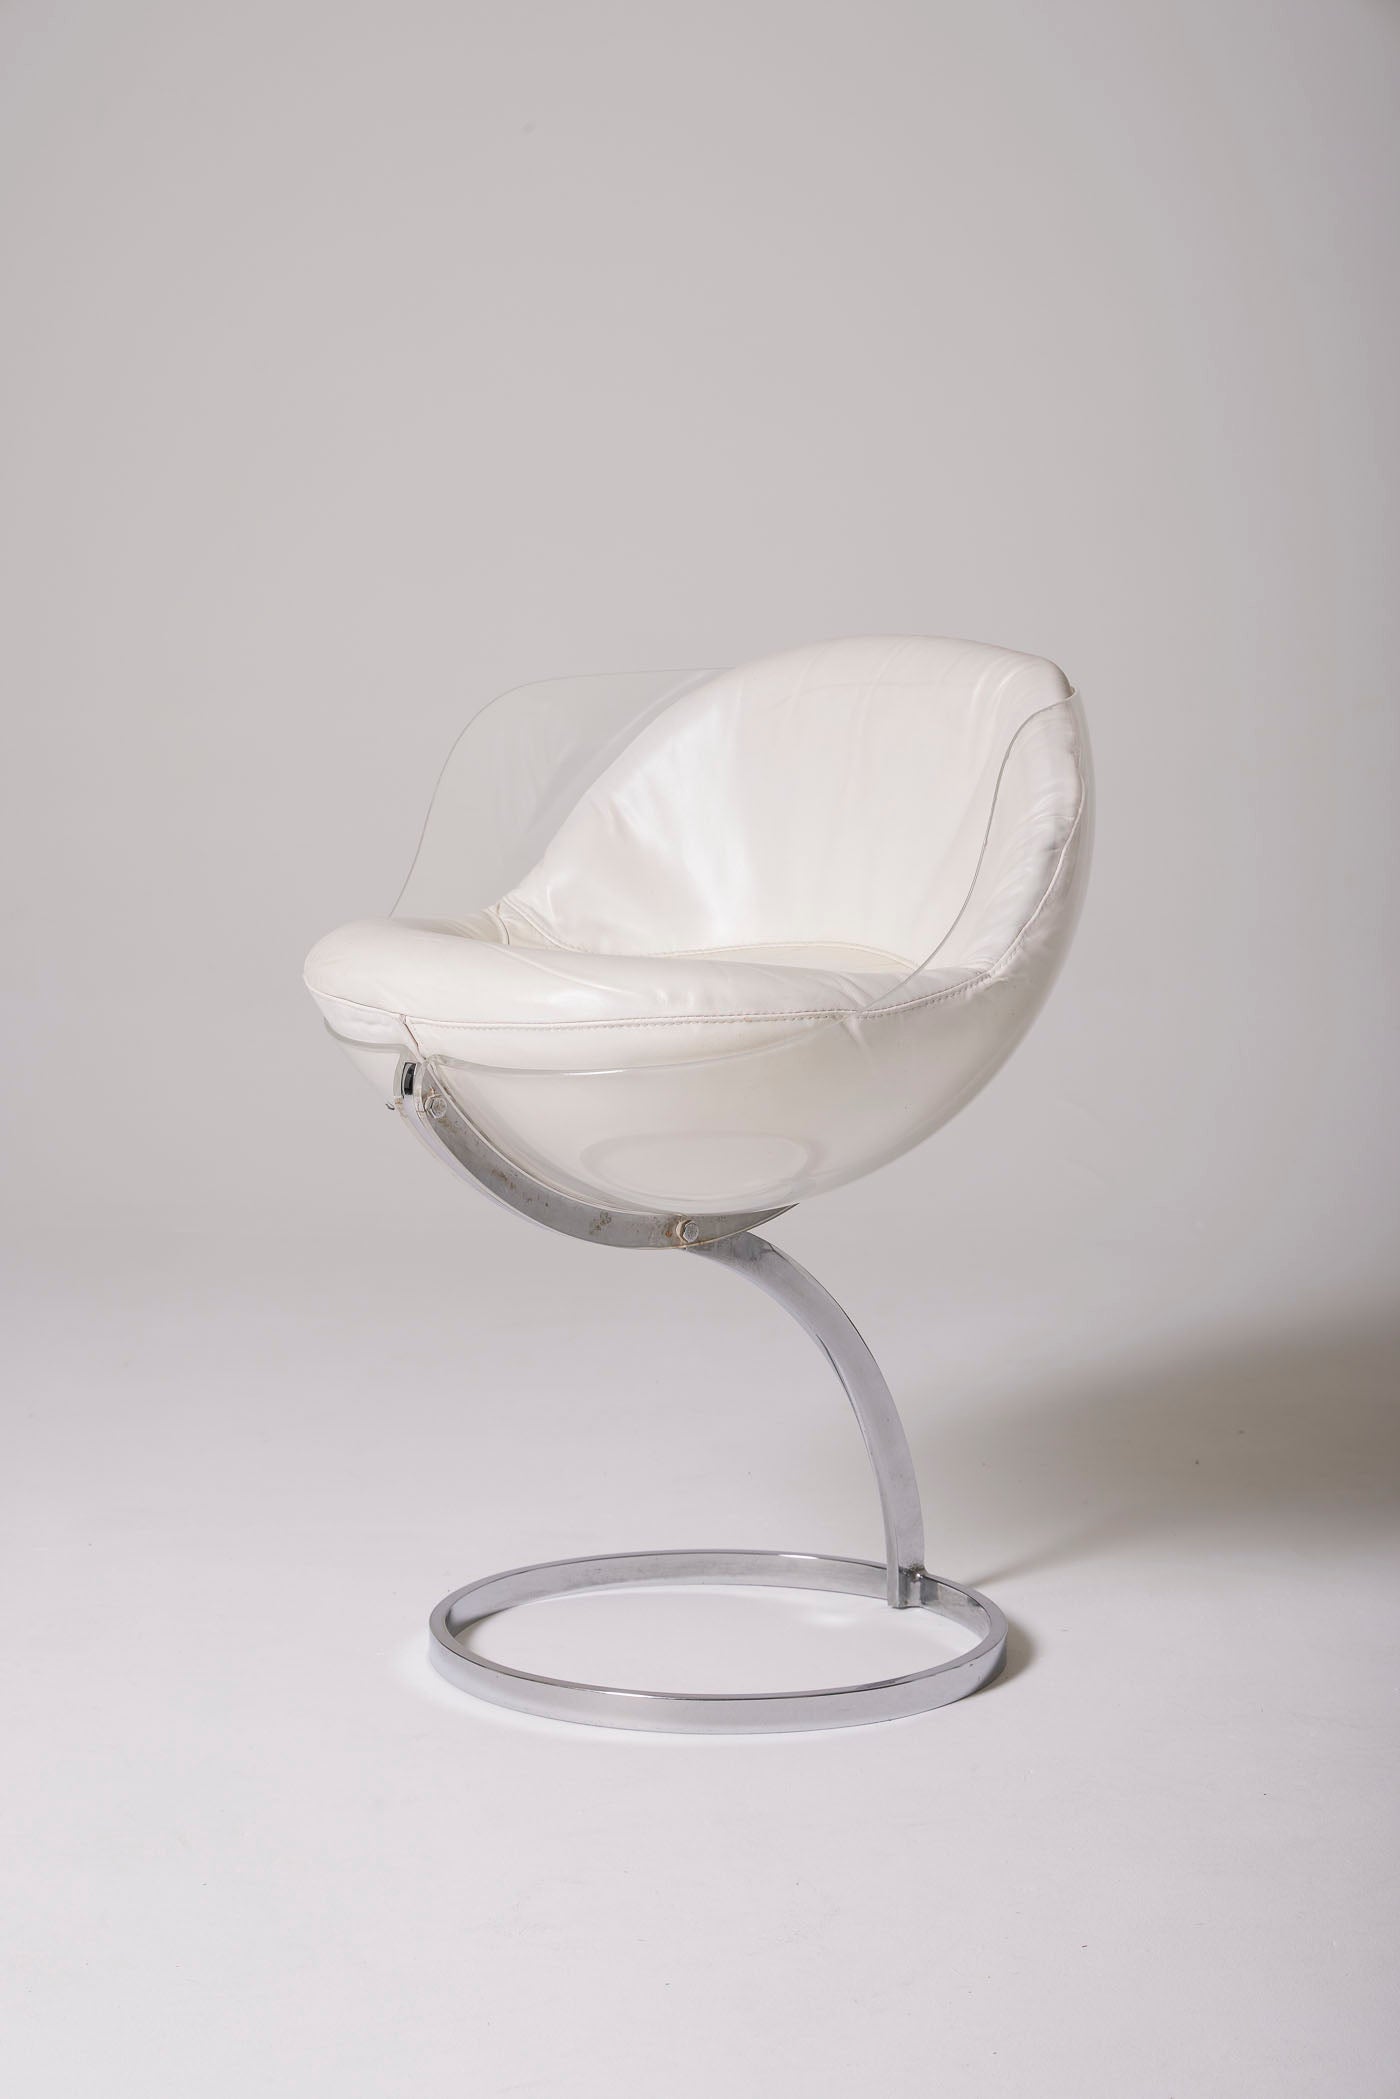 Boris Tabacoff Sphere Chair